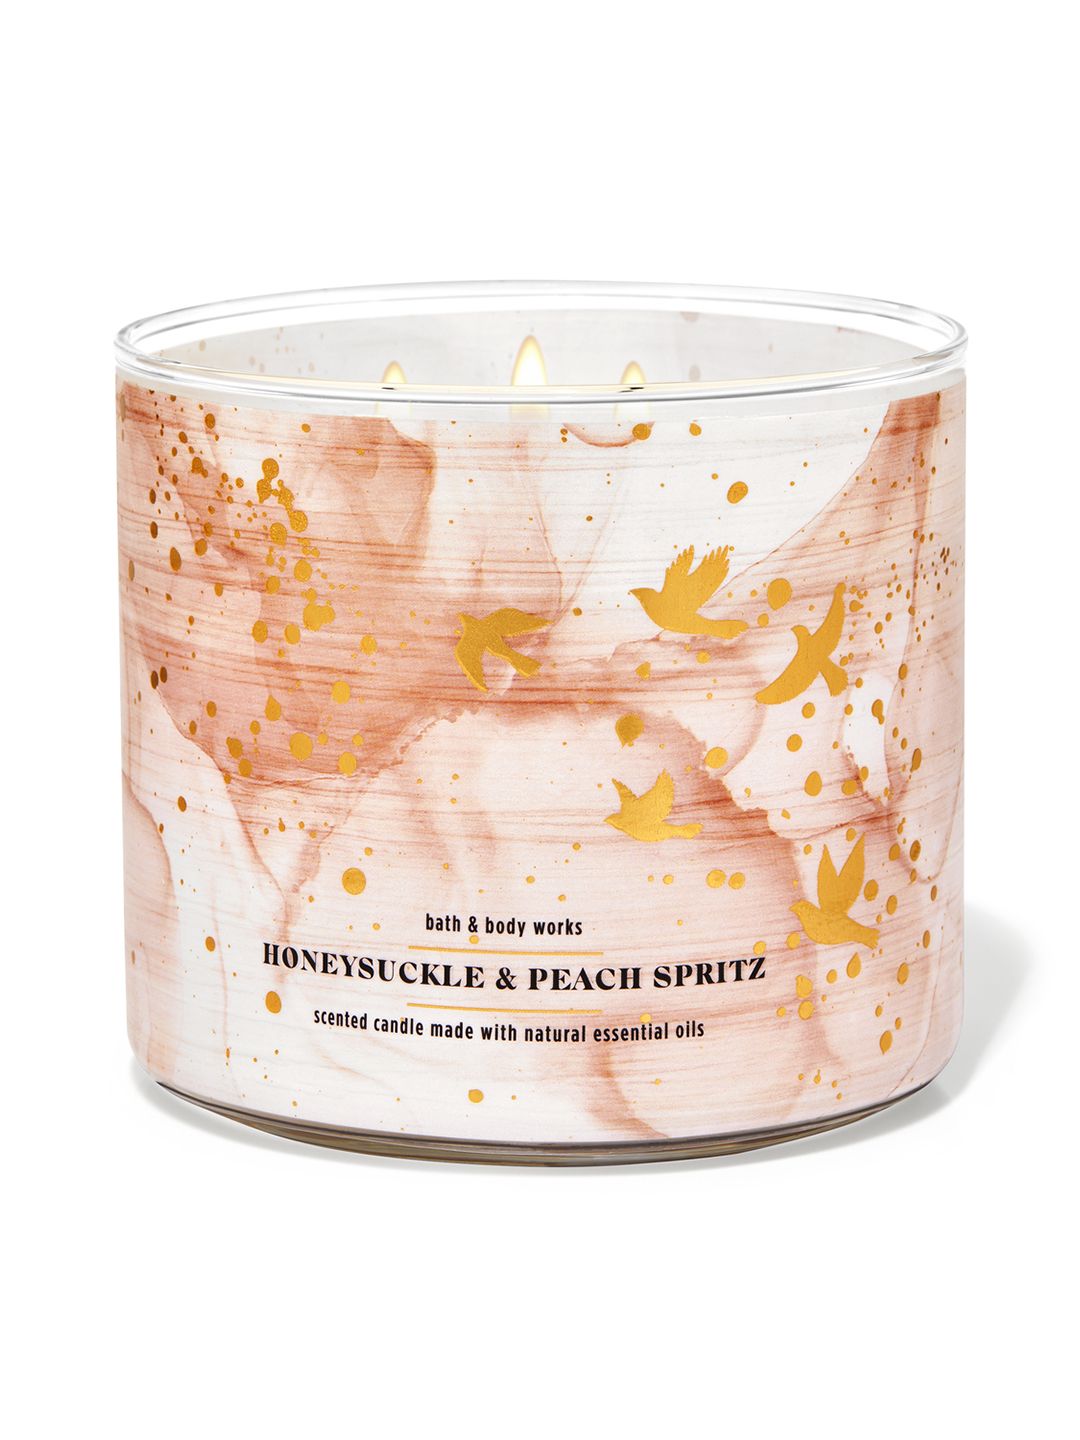 Bath & Body Works Honeysuckle & Peach Spritz 3-Wick Candle - 411 g Price in India